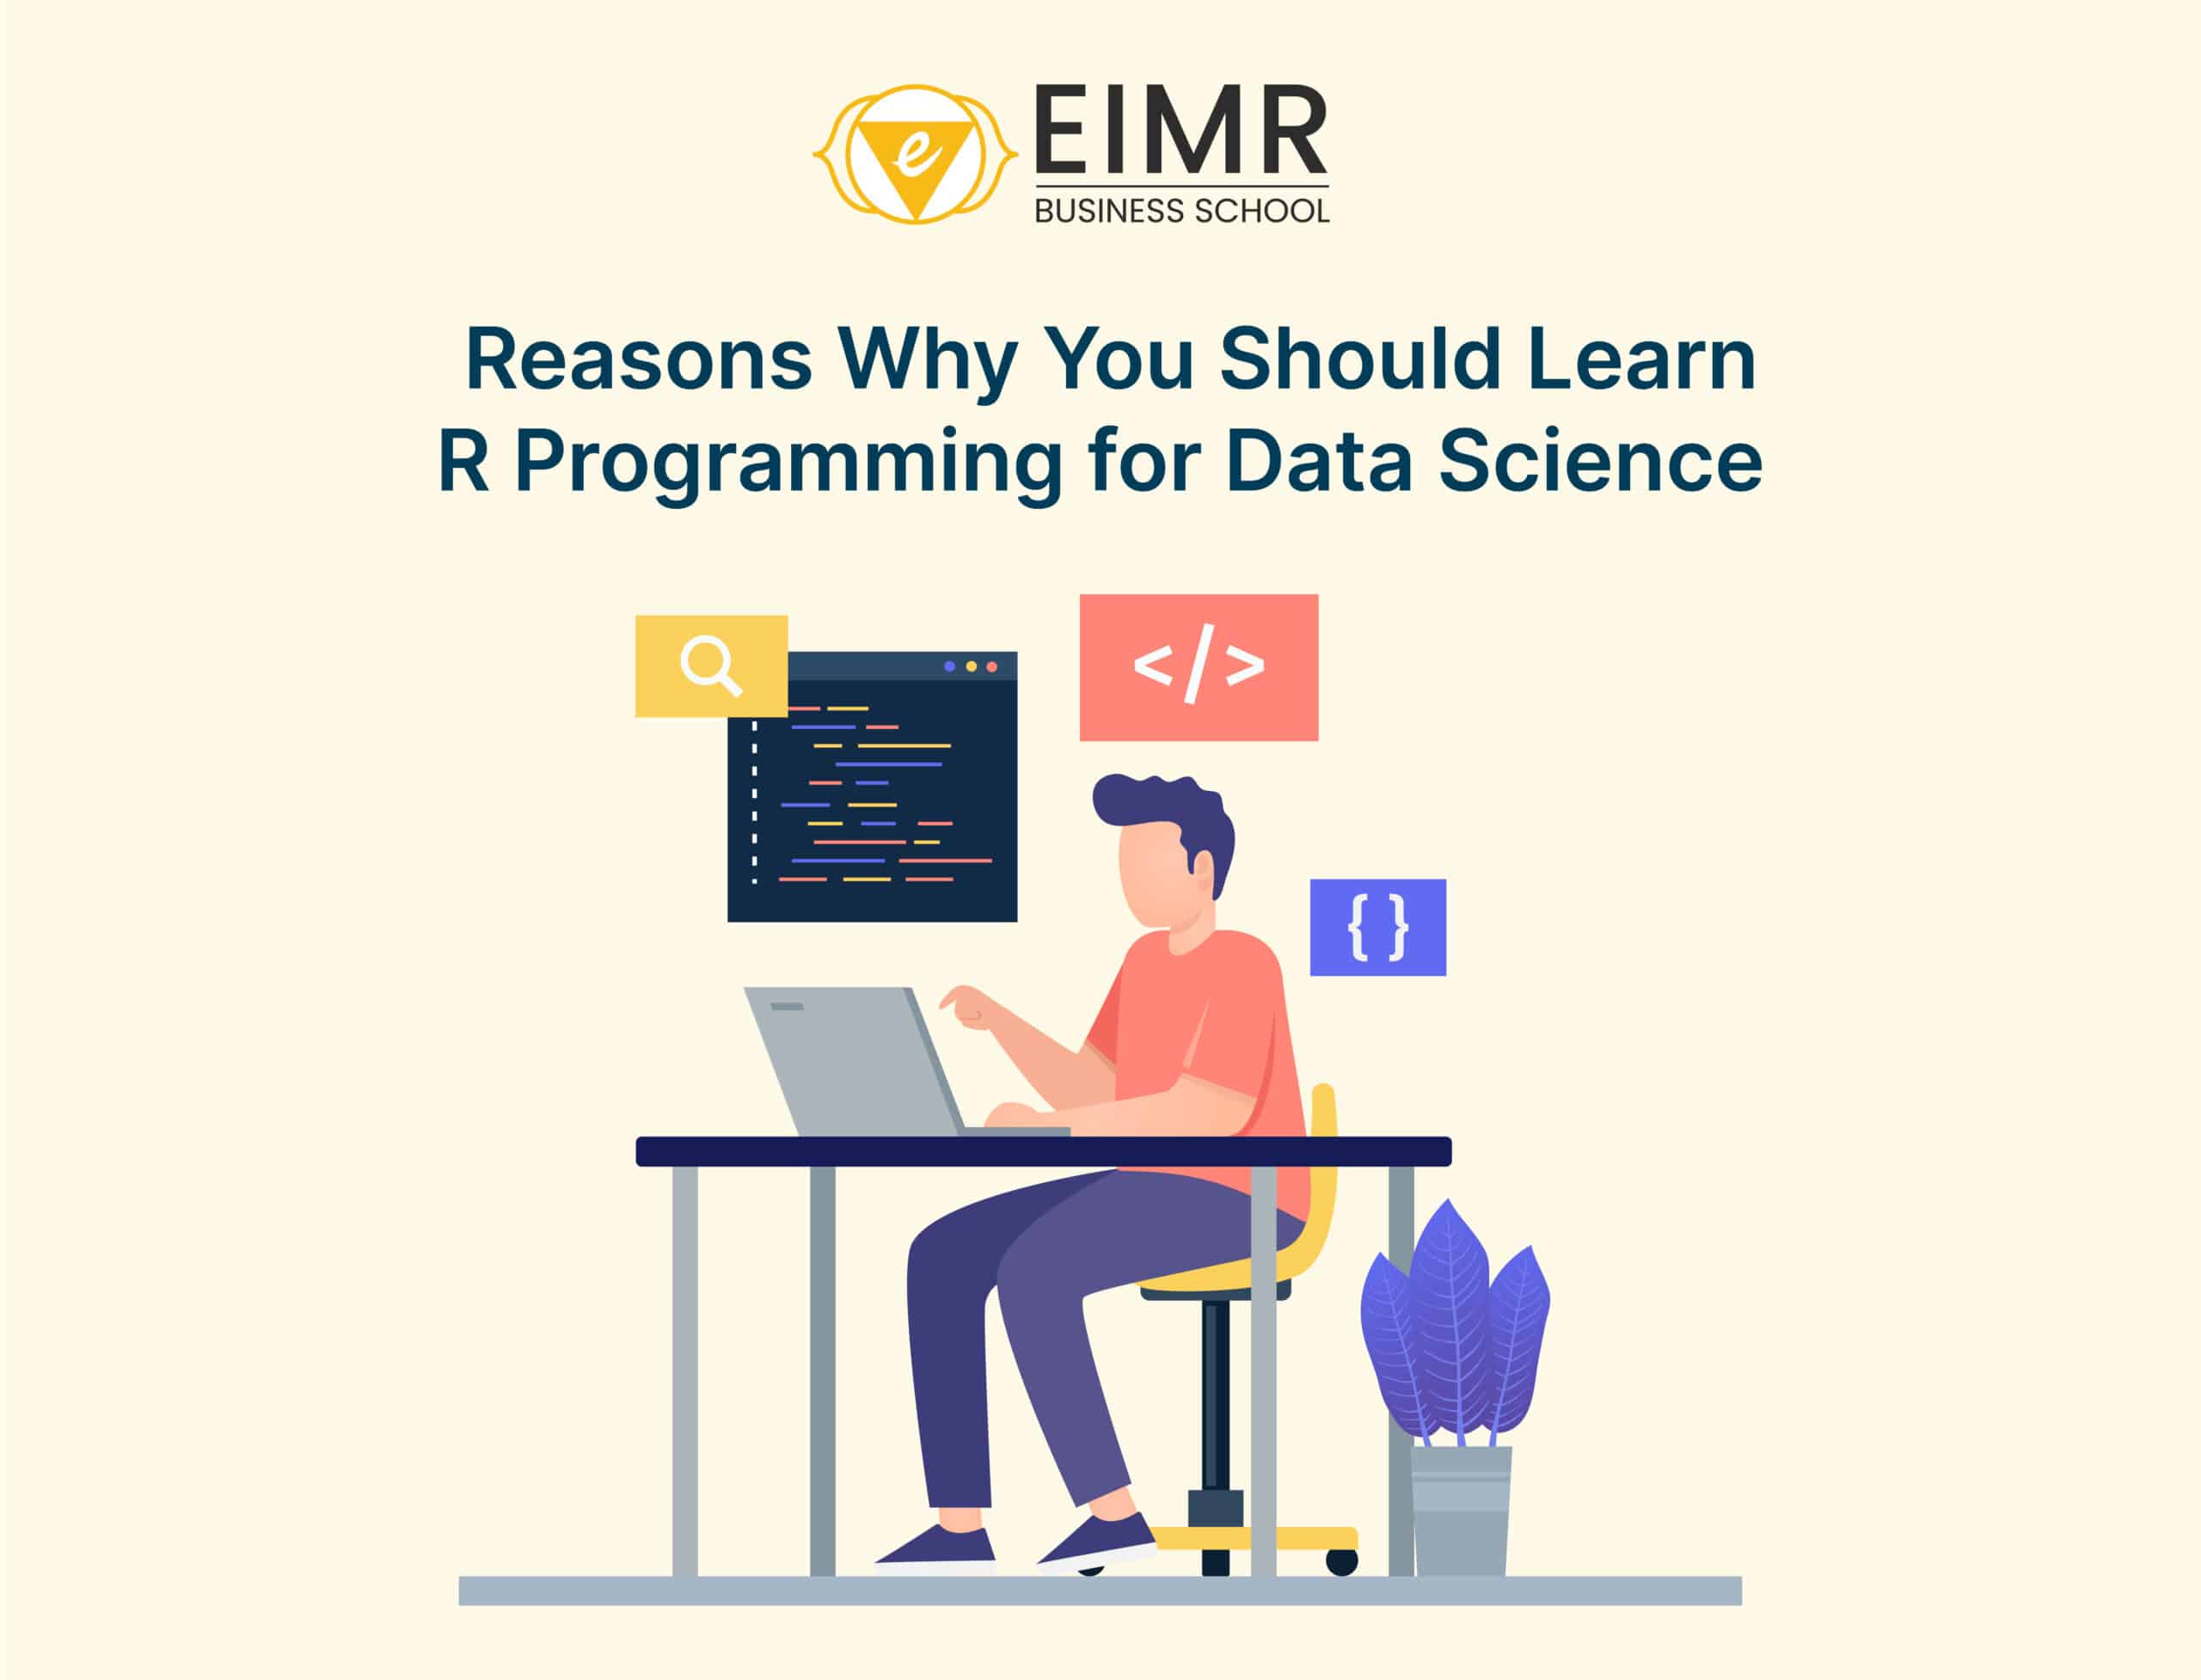 R Programing for Data Science